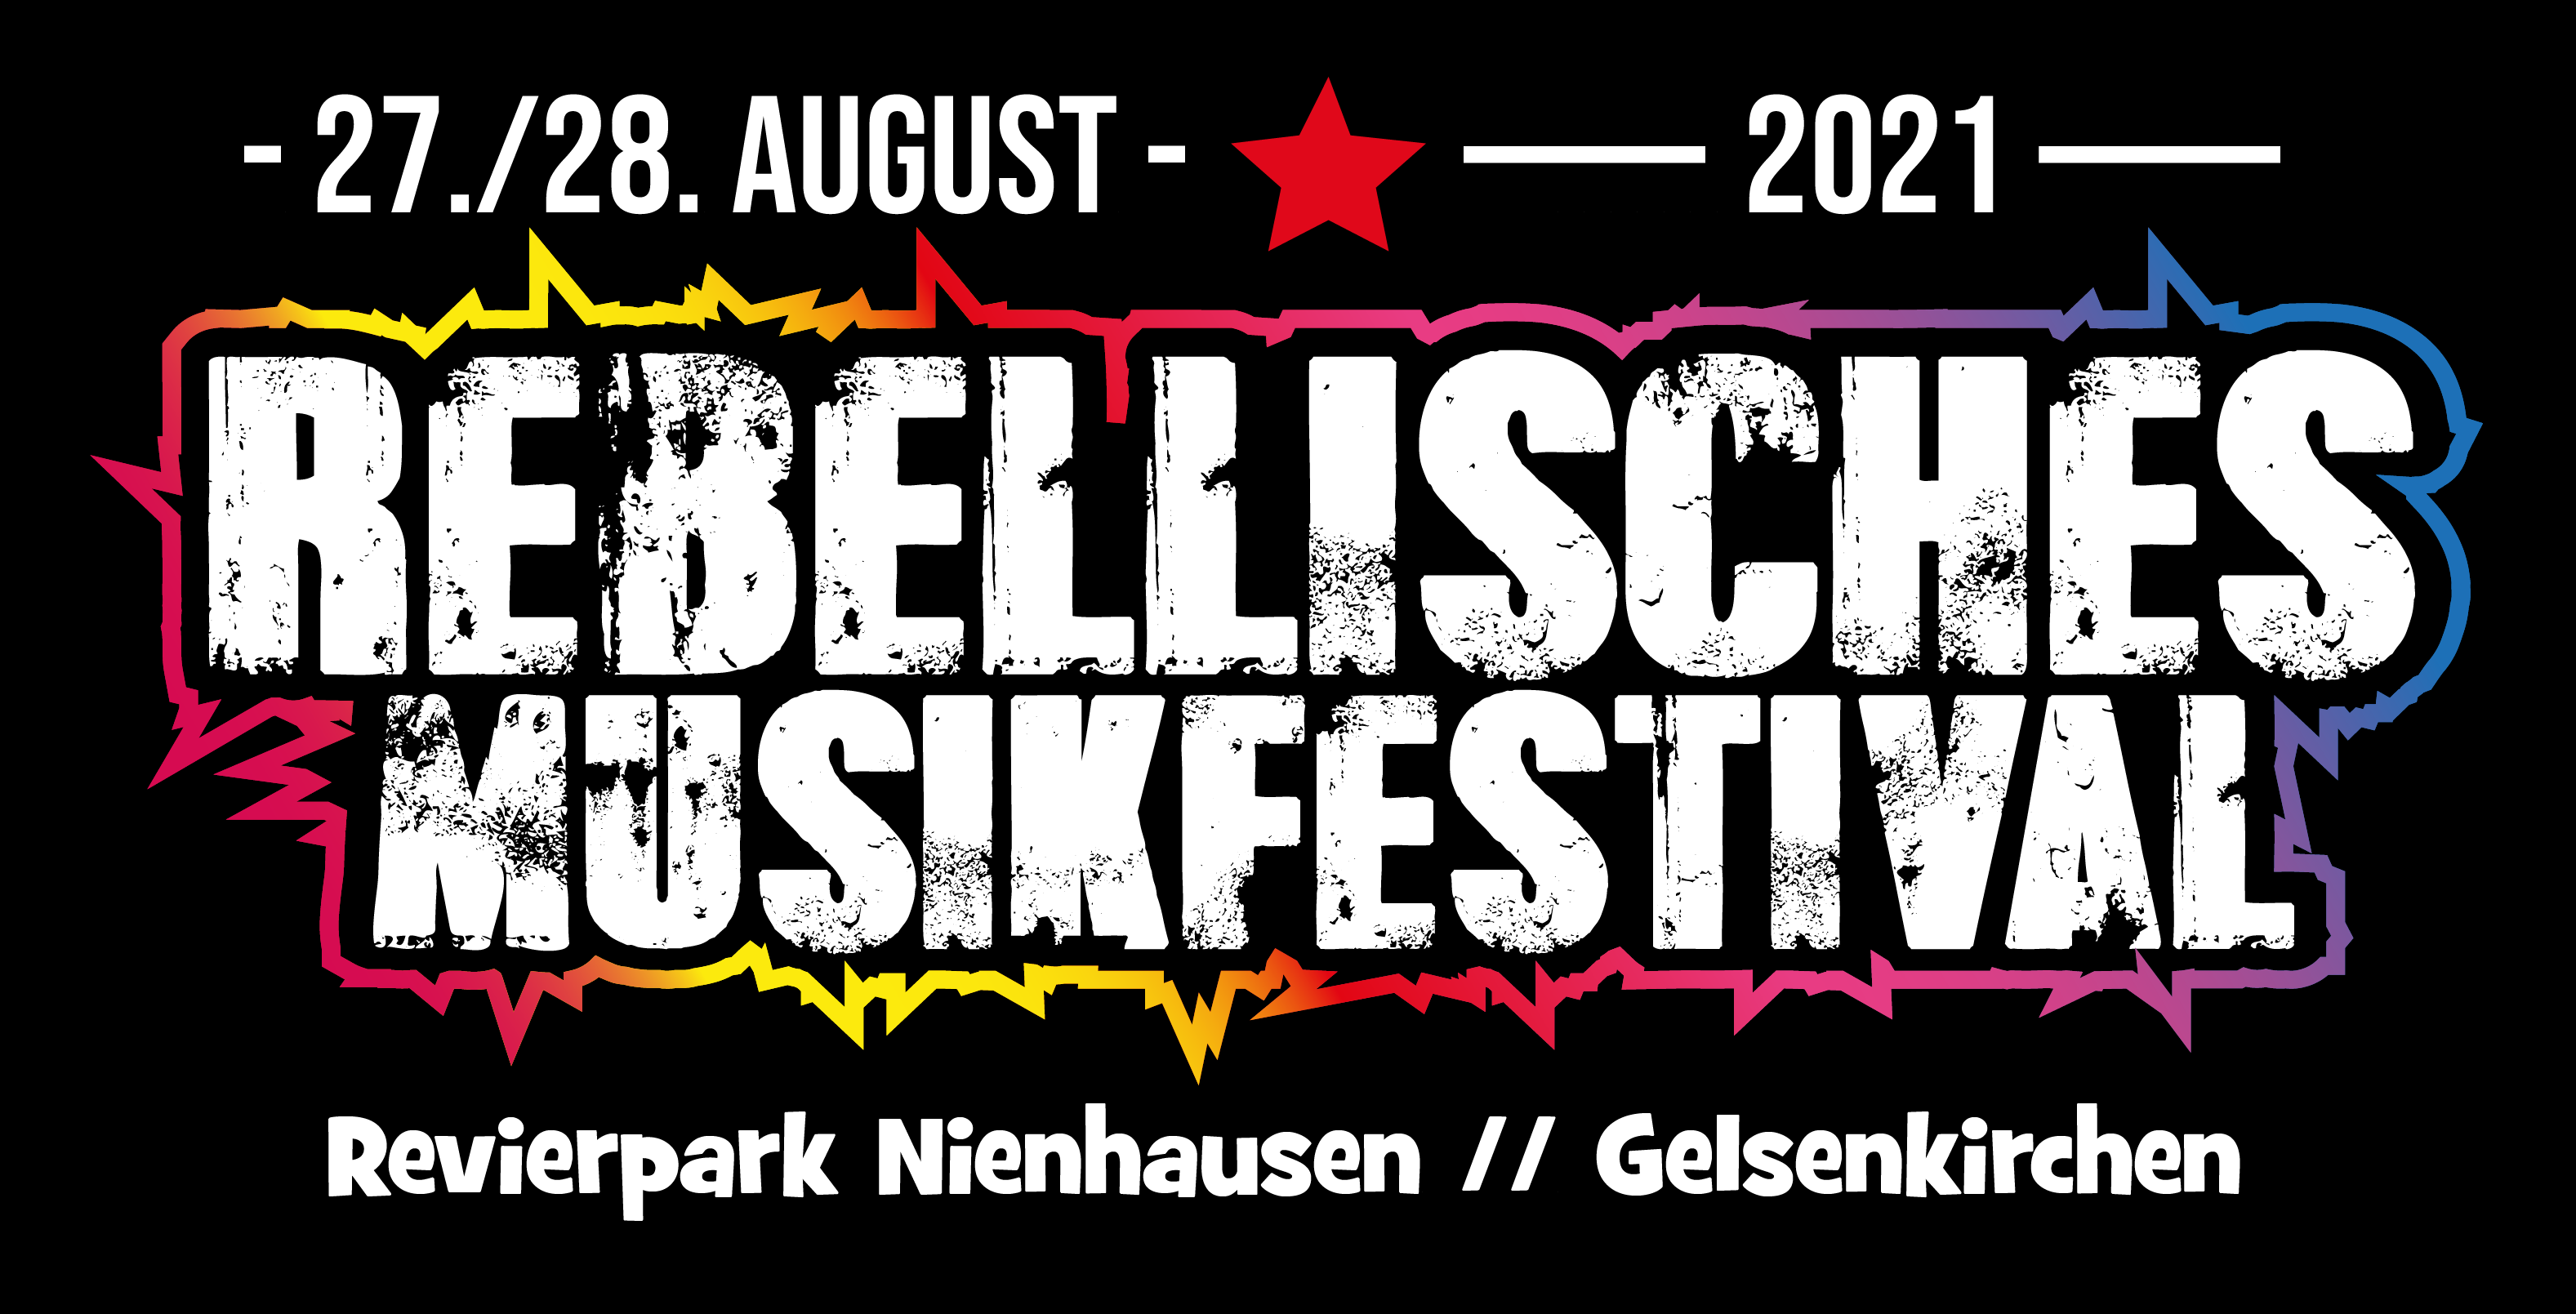 You are currently viewing Verbot des Rebellischen Musikfestivals angedroht – Jetzt erst recht zum Rebellischen Musikfestival!